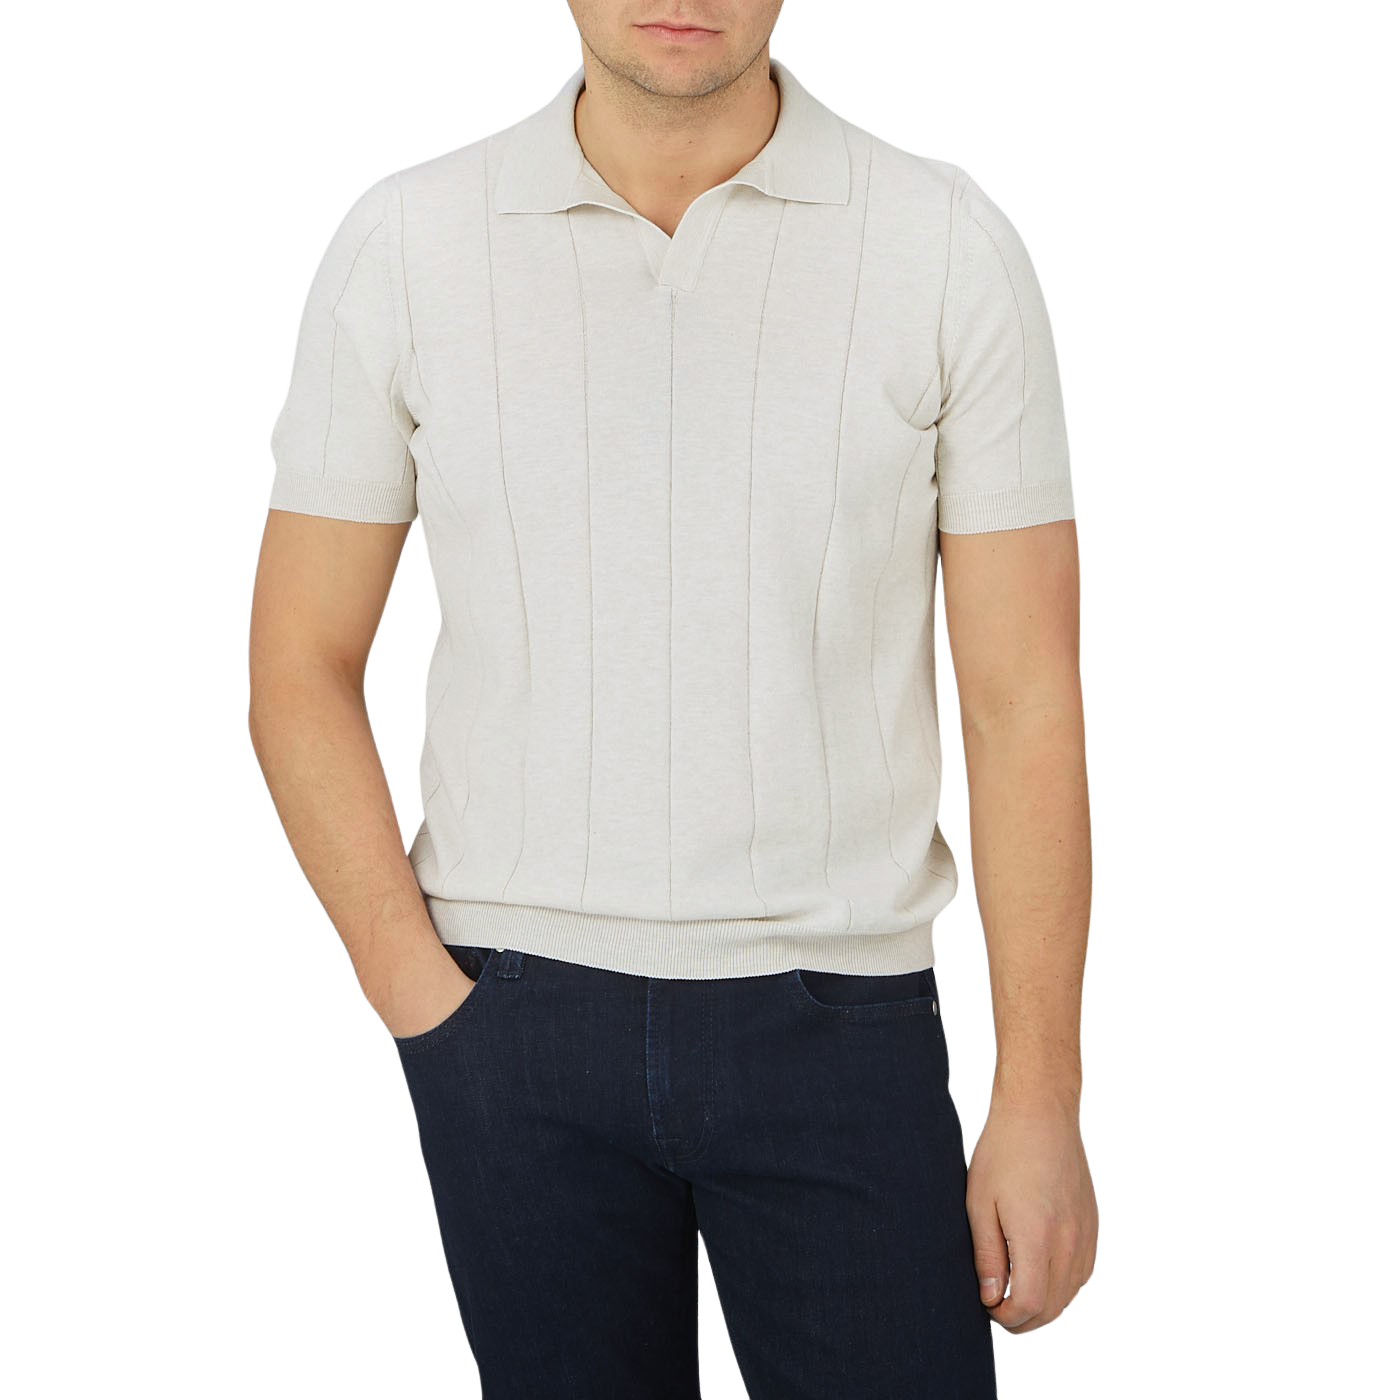 Men's Polo Shirt, Knitted Cotton, Cream